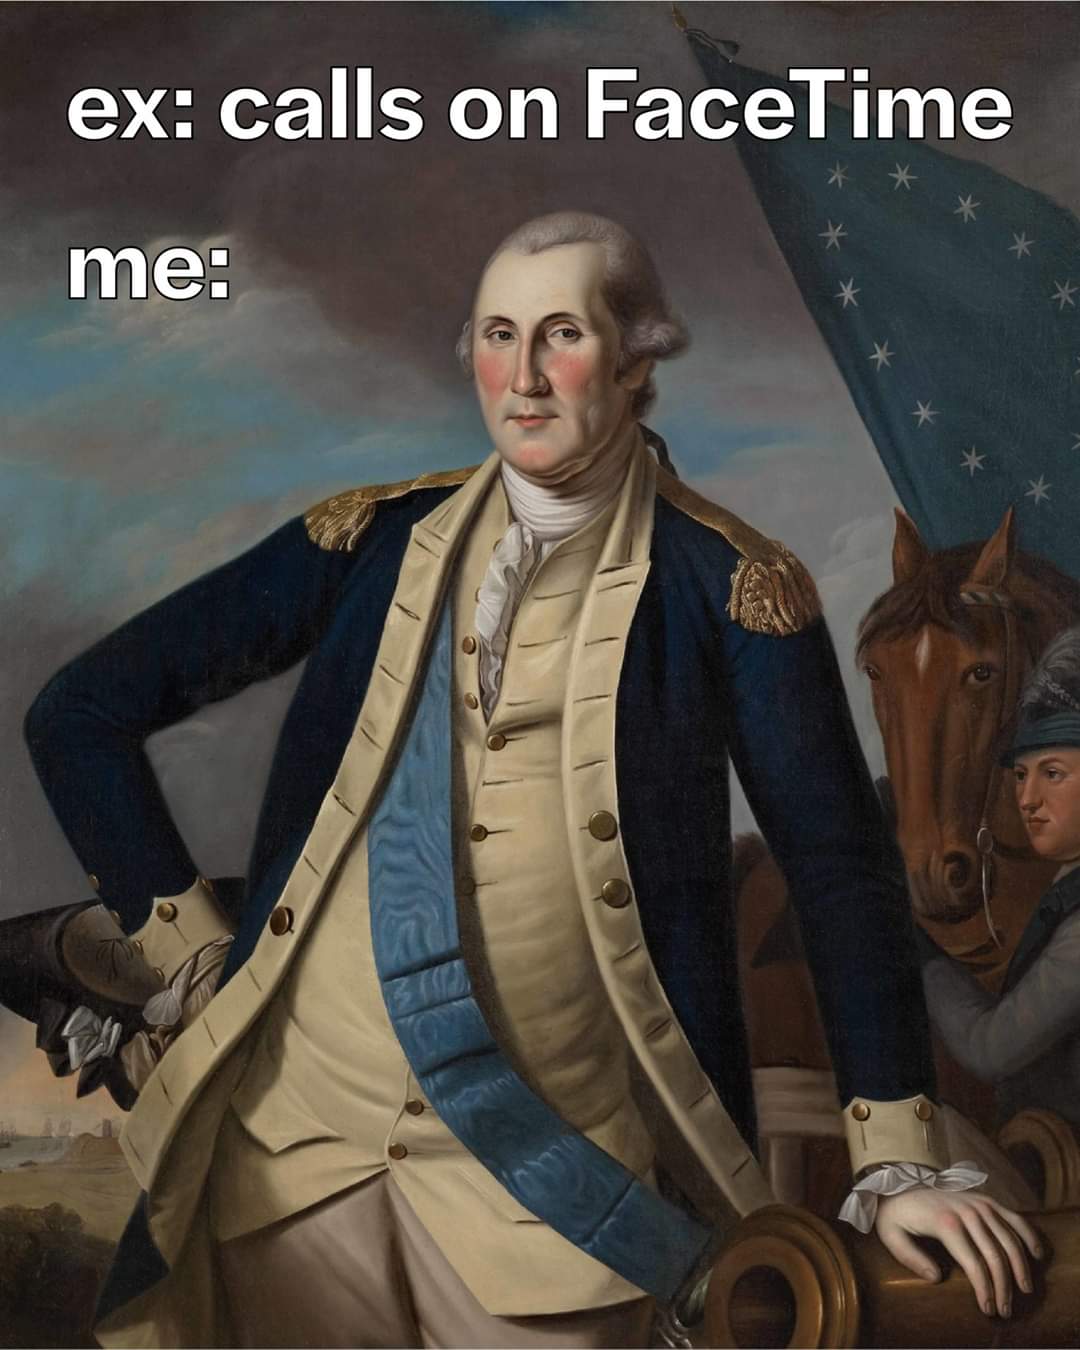 An internet meme pokes fun at a portrait of George Washington.